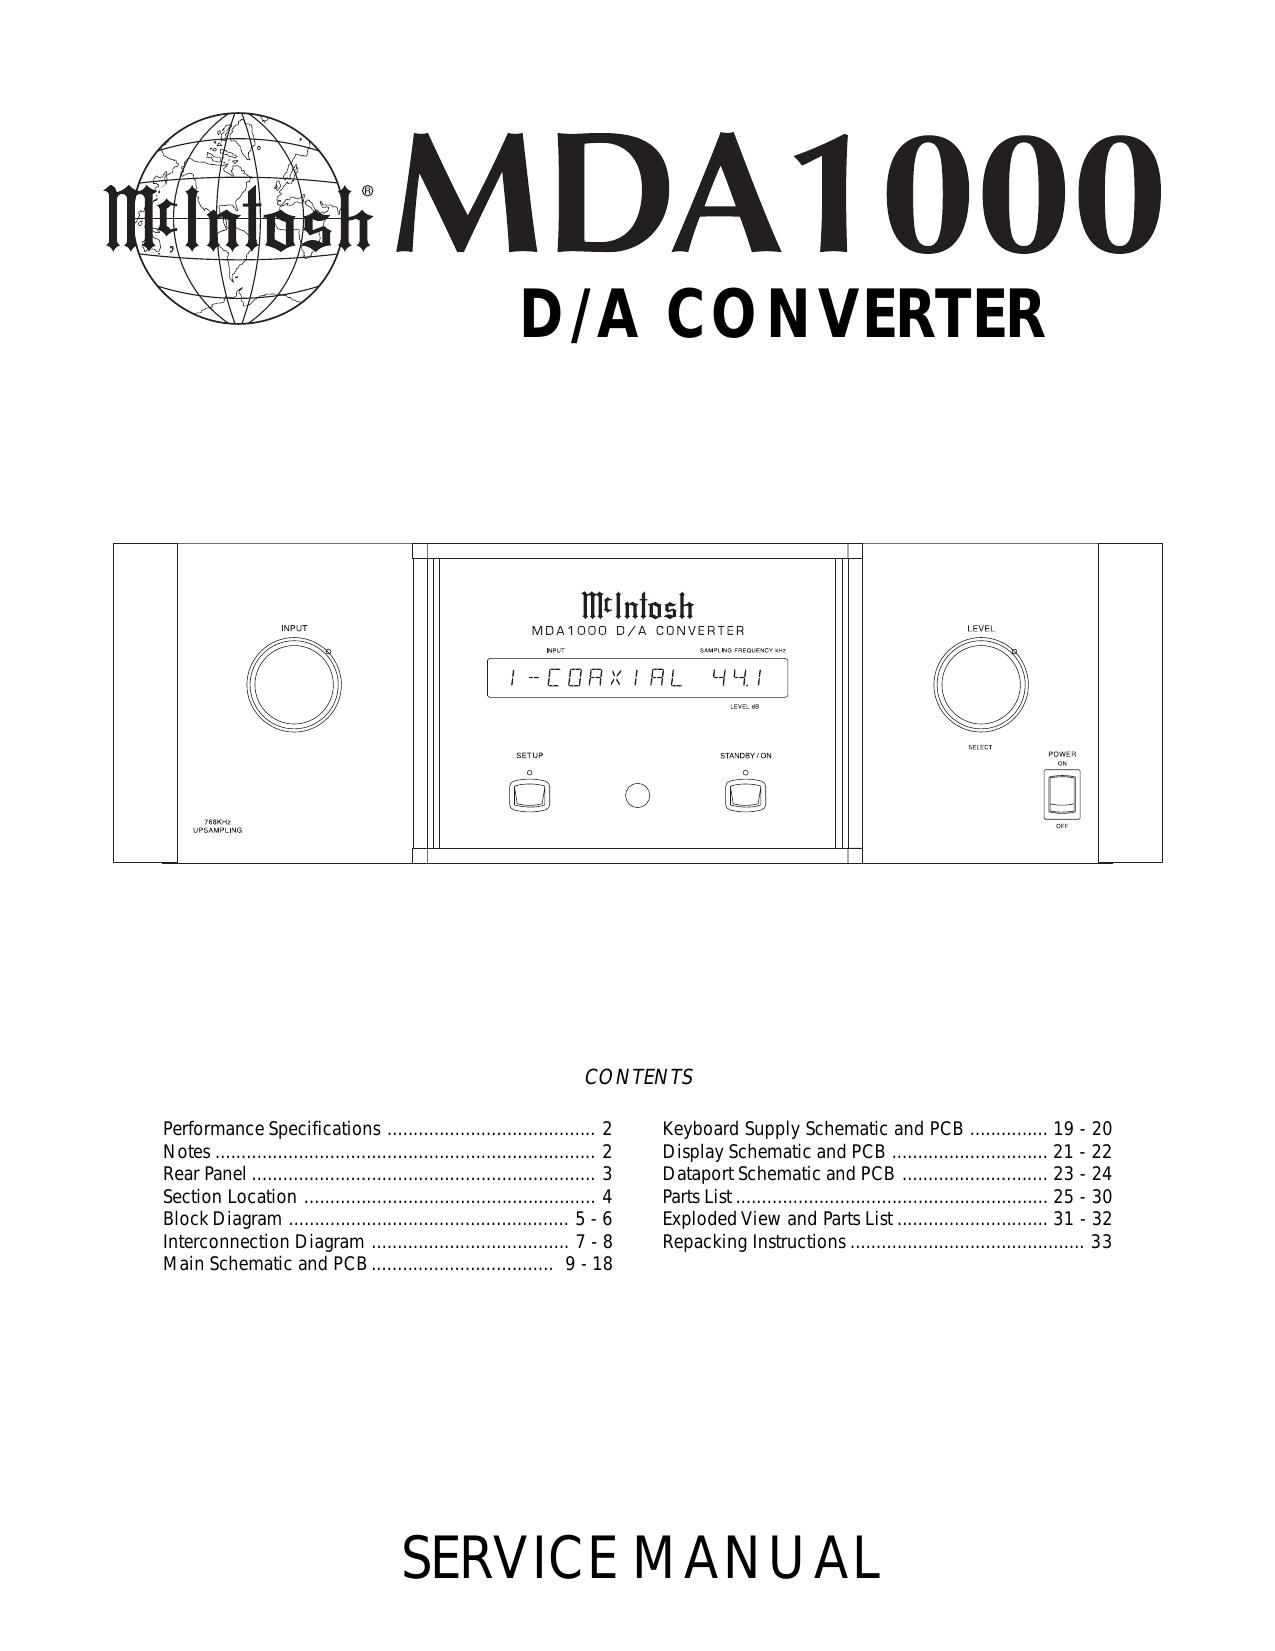 Mcintosh mda1000 service manual